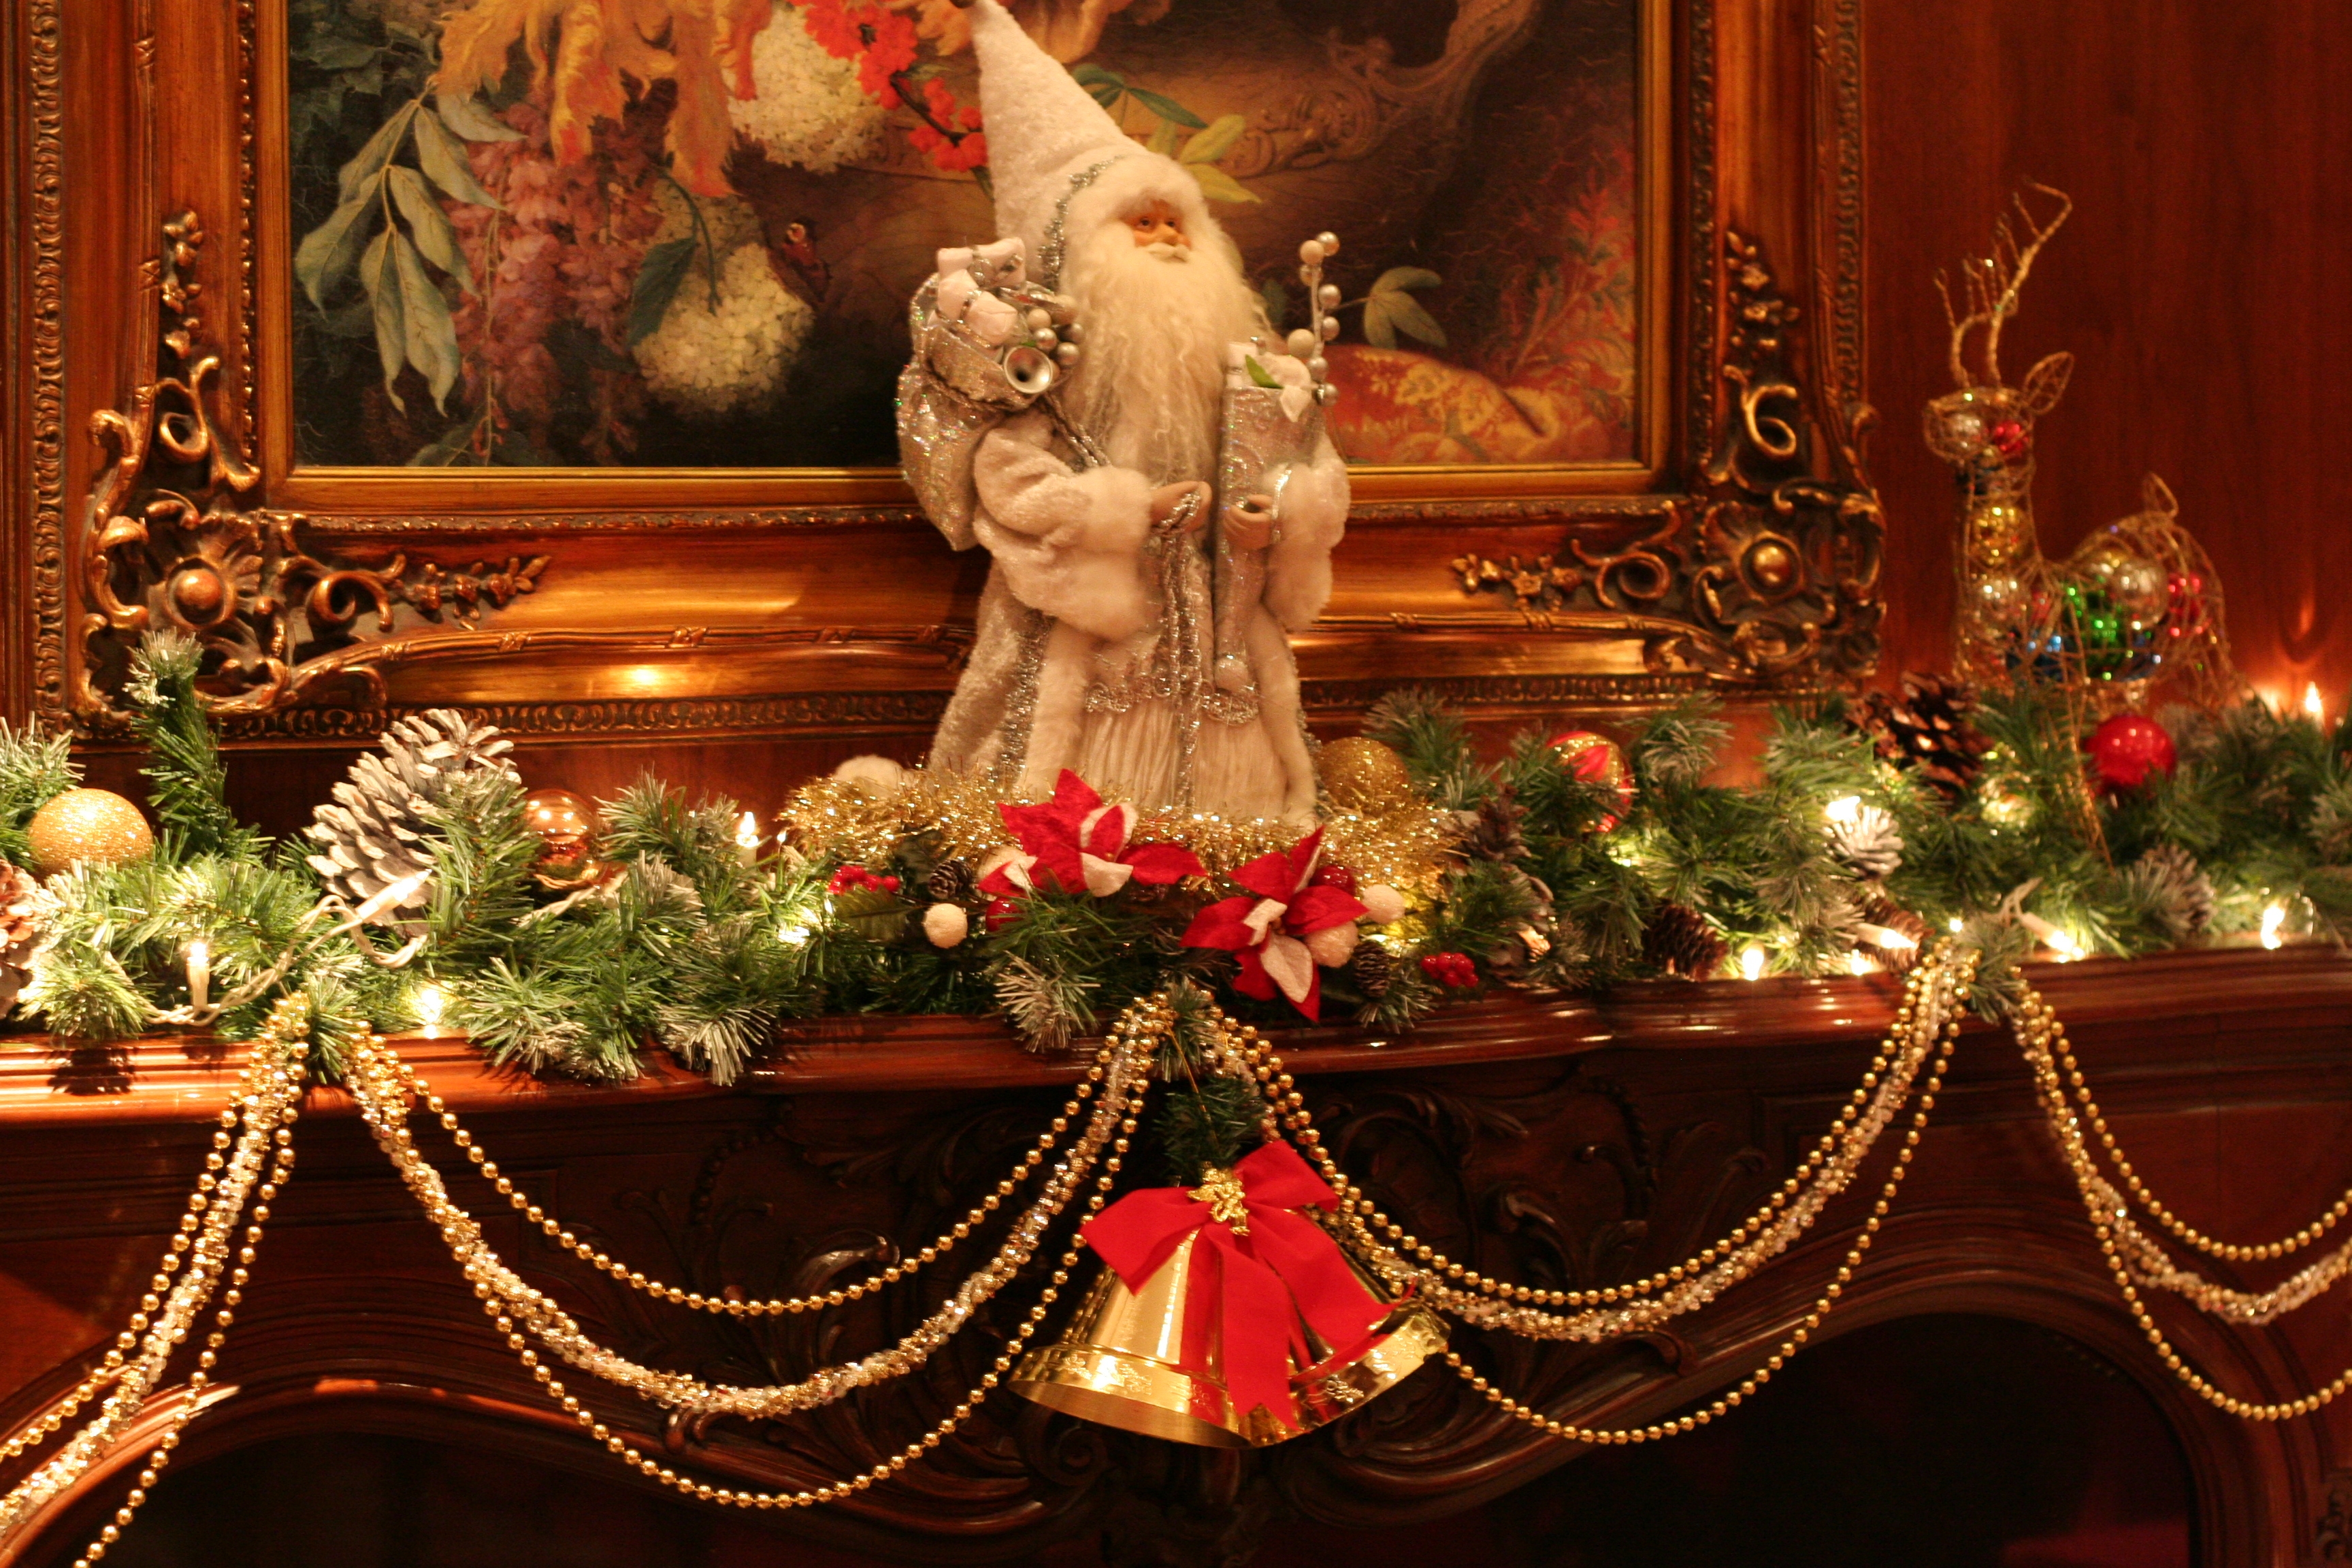 Fireplace decoration with Santa & jingle Bells